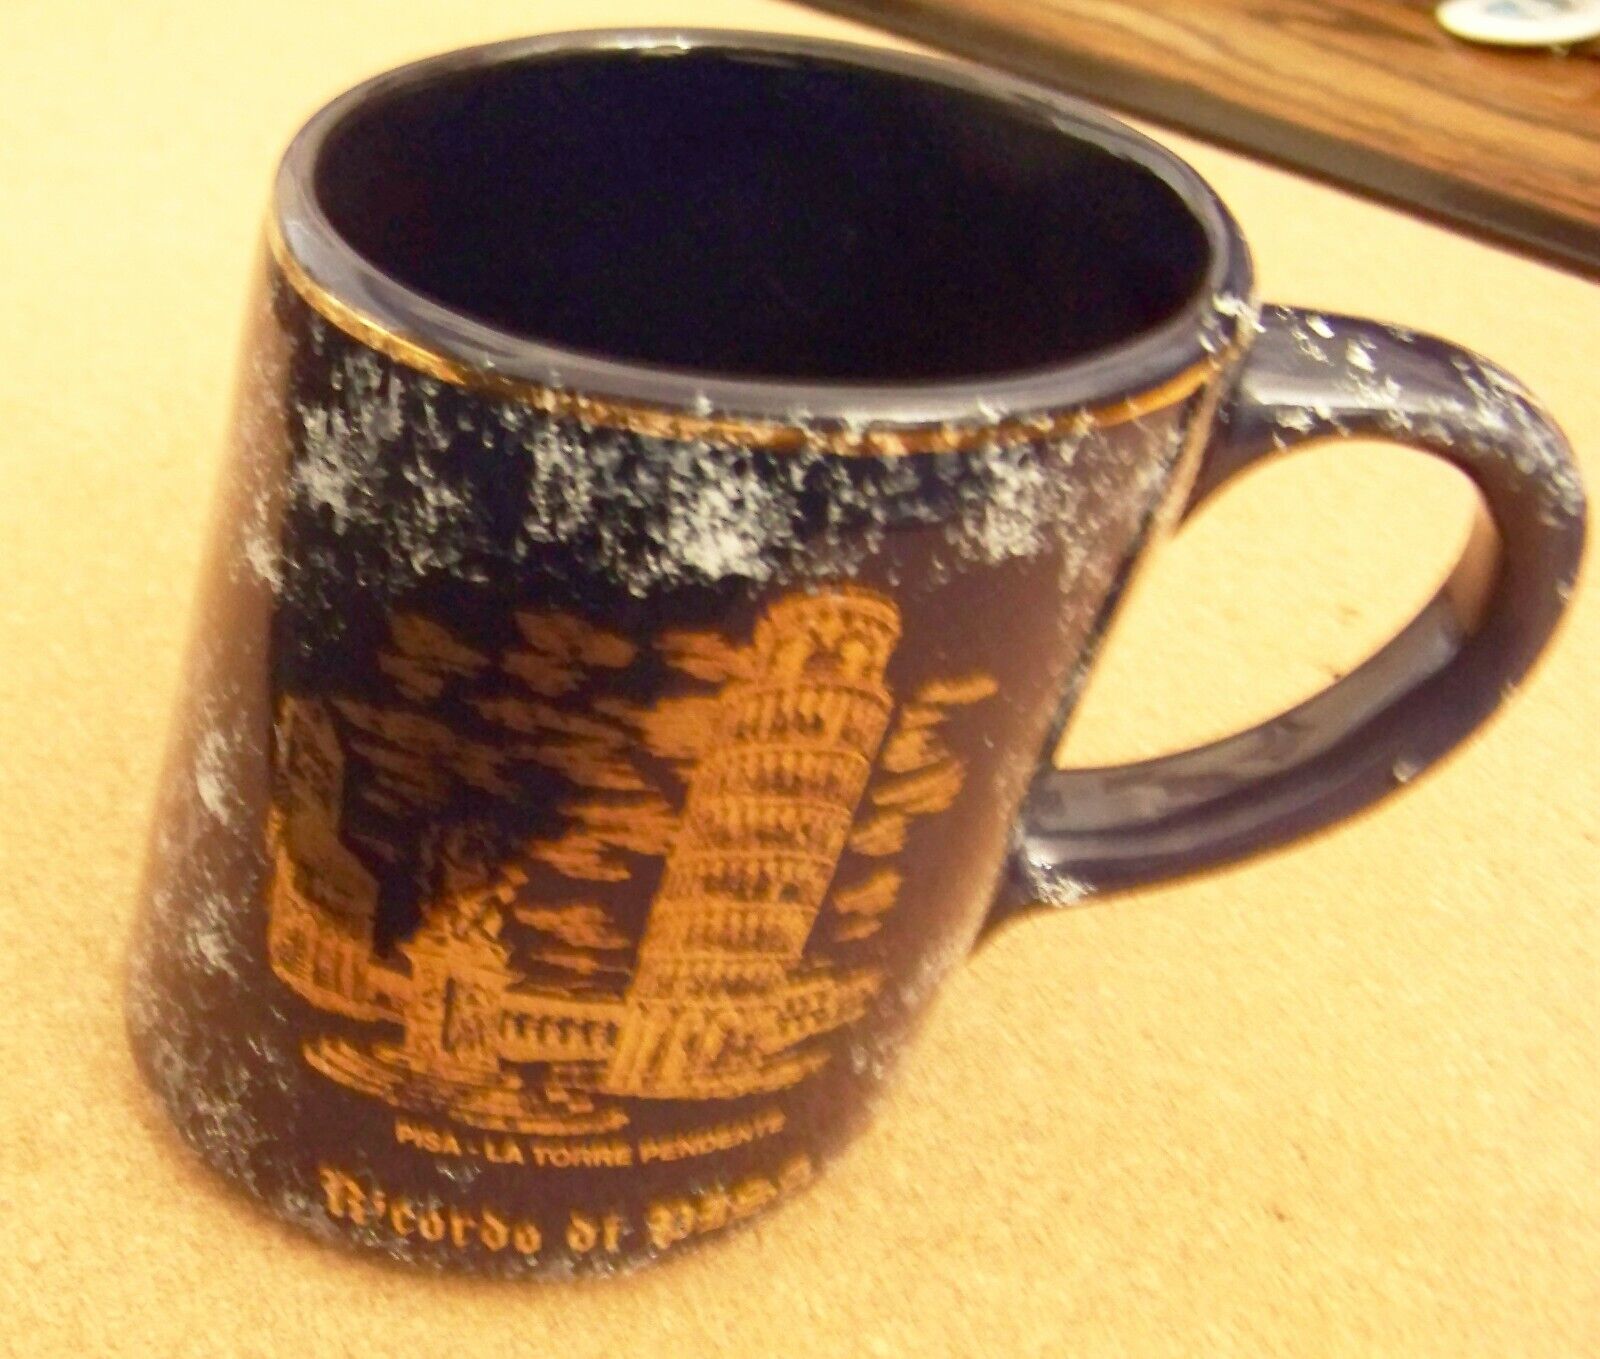 Leaning Tower of Pisa tilted mug cup Italy souvenir Ricordo di Pisa